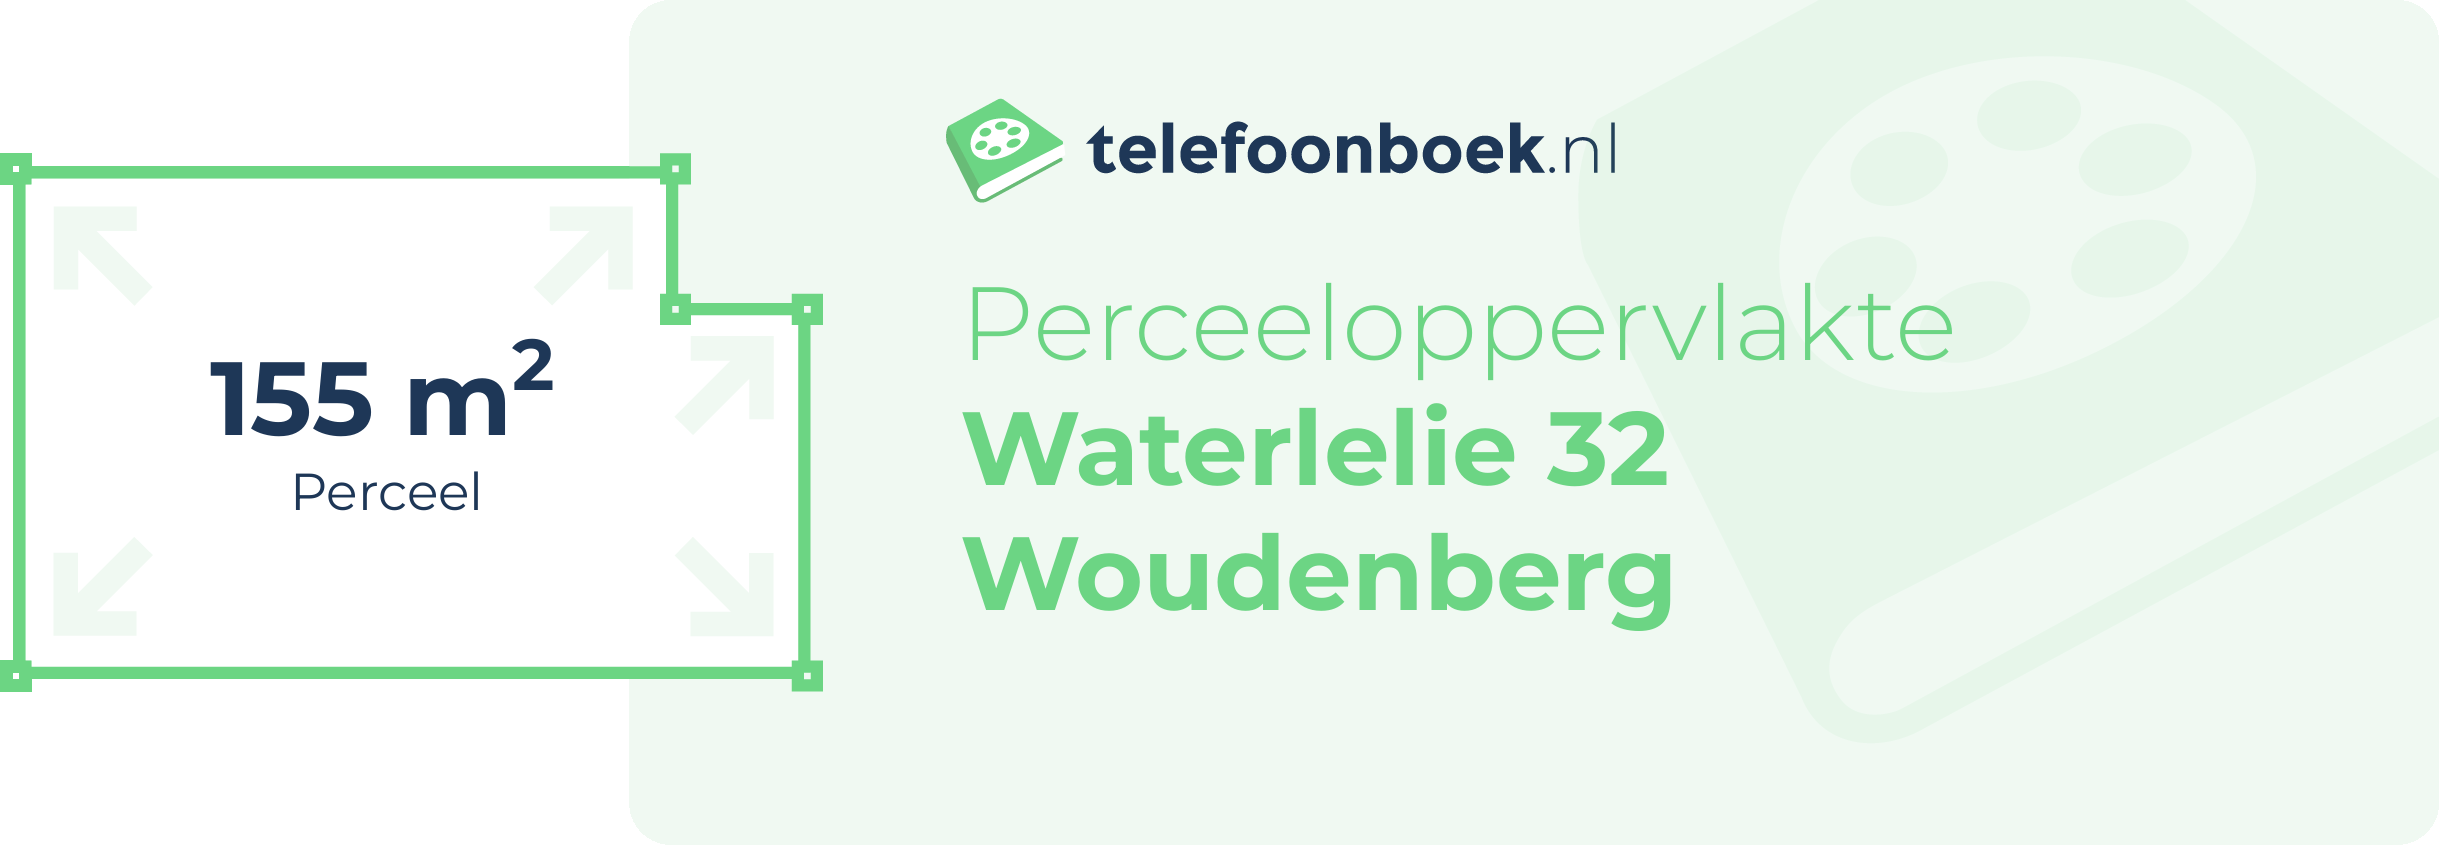 Perceeloppervlakte Waterlelie 32 Woudenberg